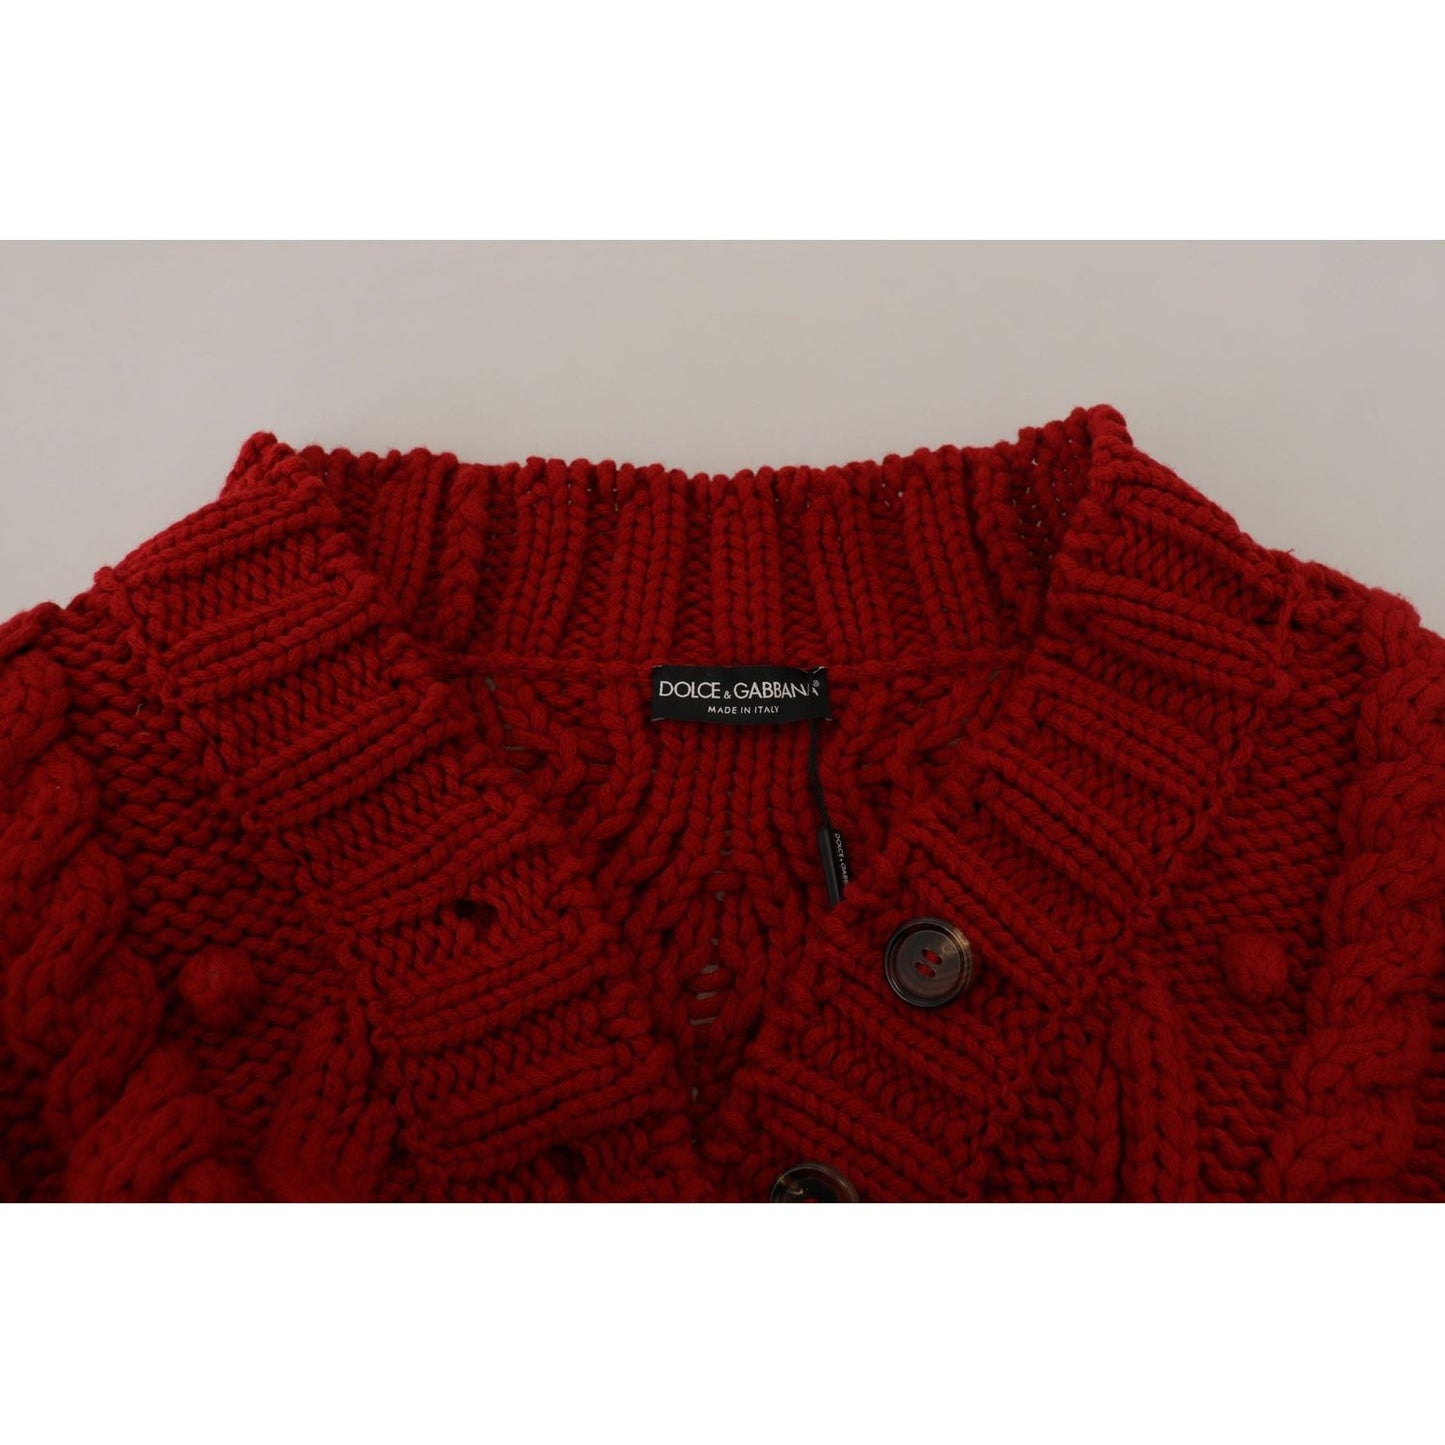 Dolce & Gabbana Elegant Red Virgin Wool Cardigan red-wool-knit-button-down-cardigan-sweater